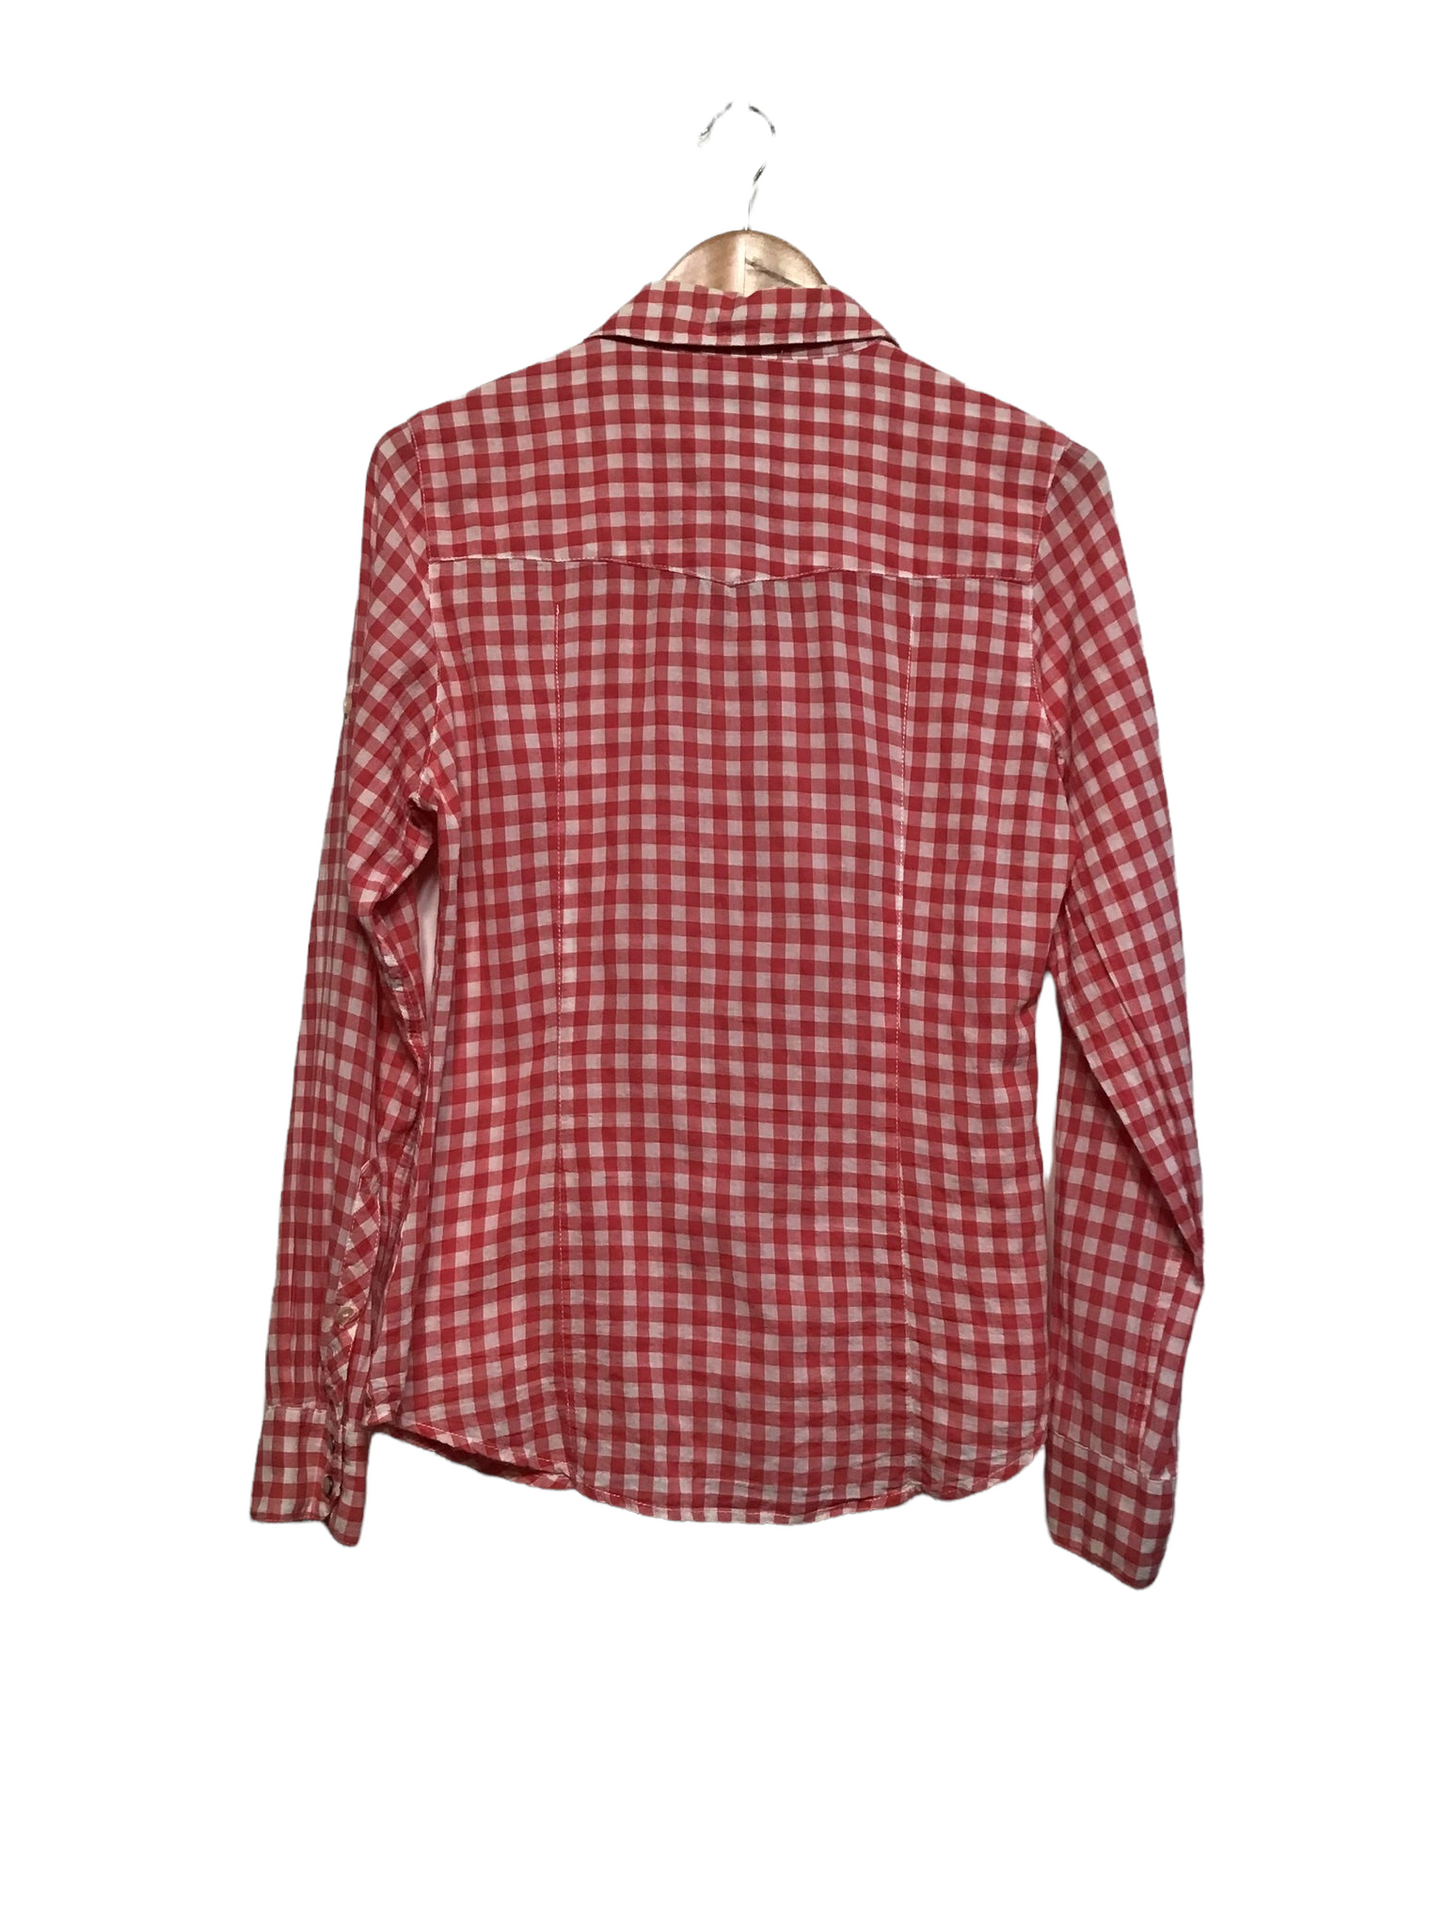 Gap Red Checkered Shirt (Size M)